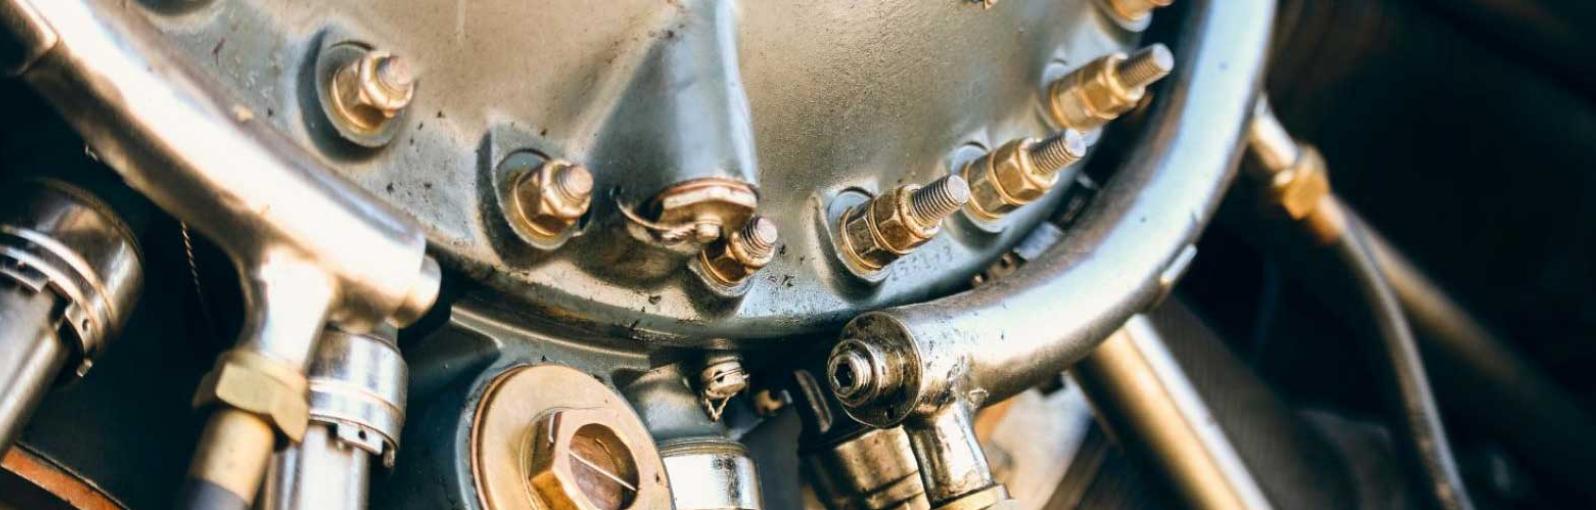 Close up of an engine